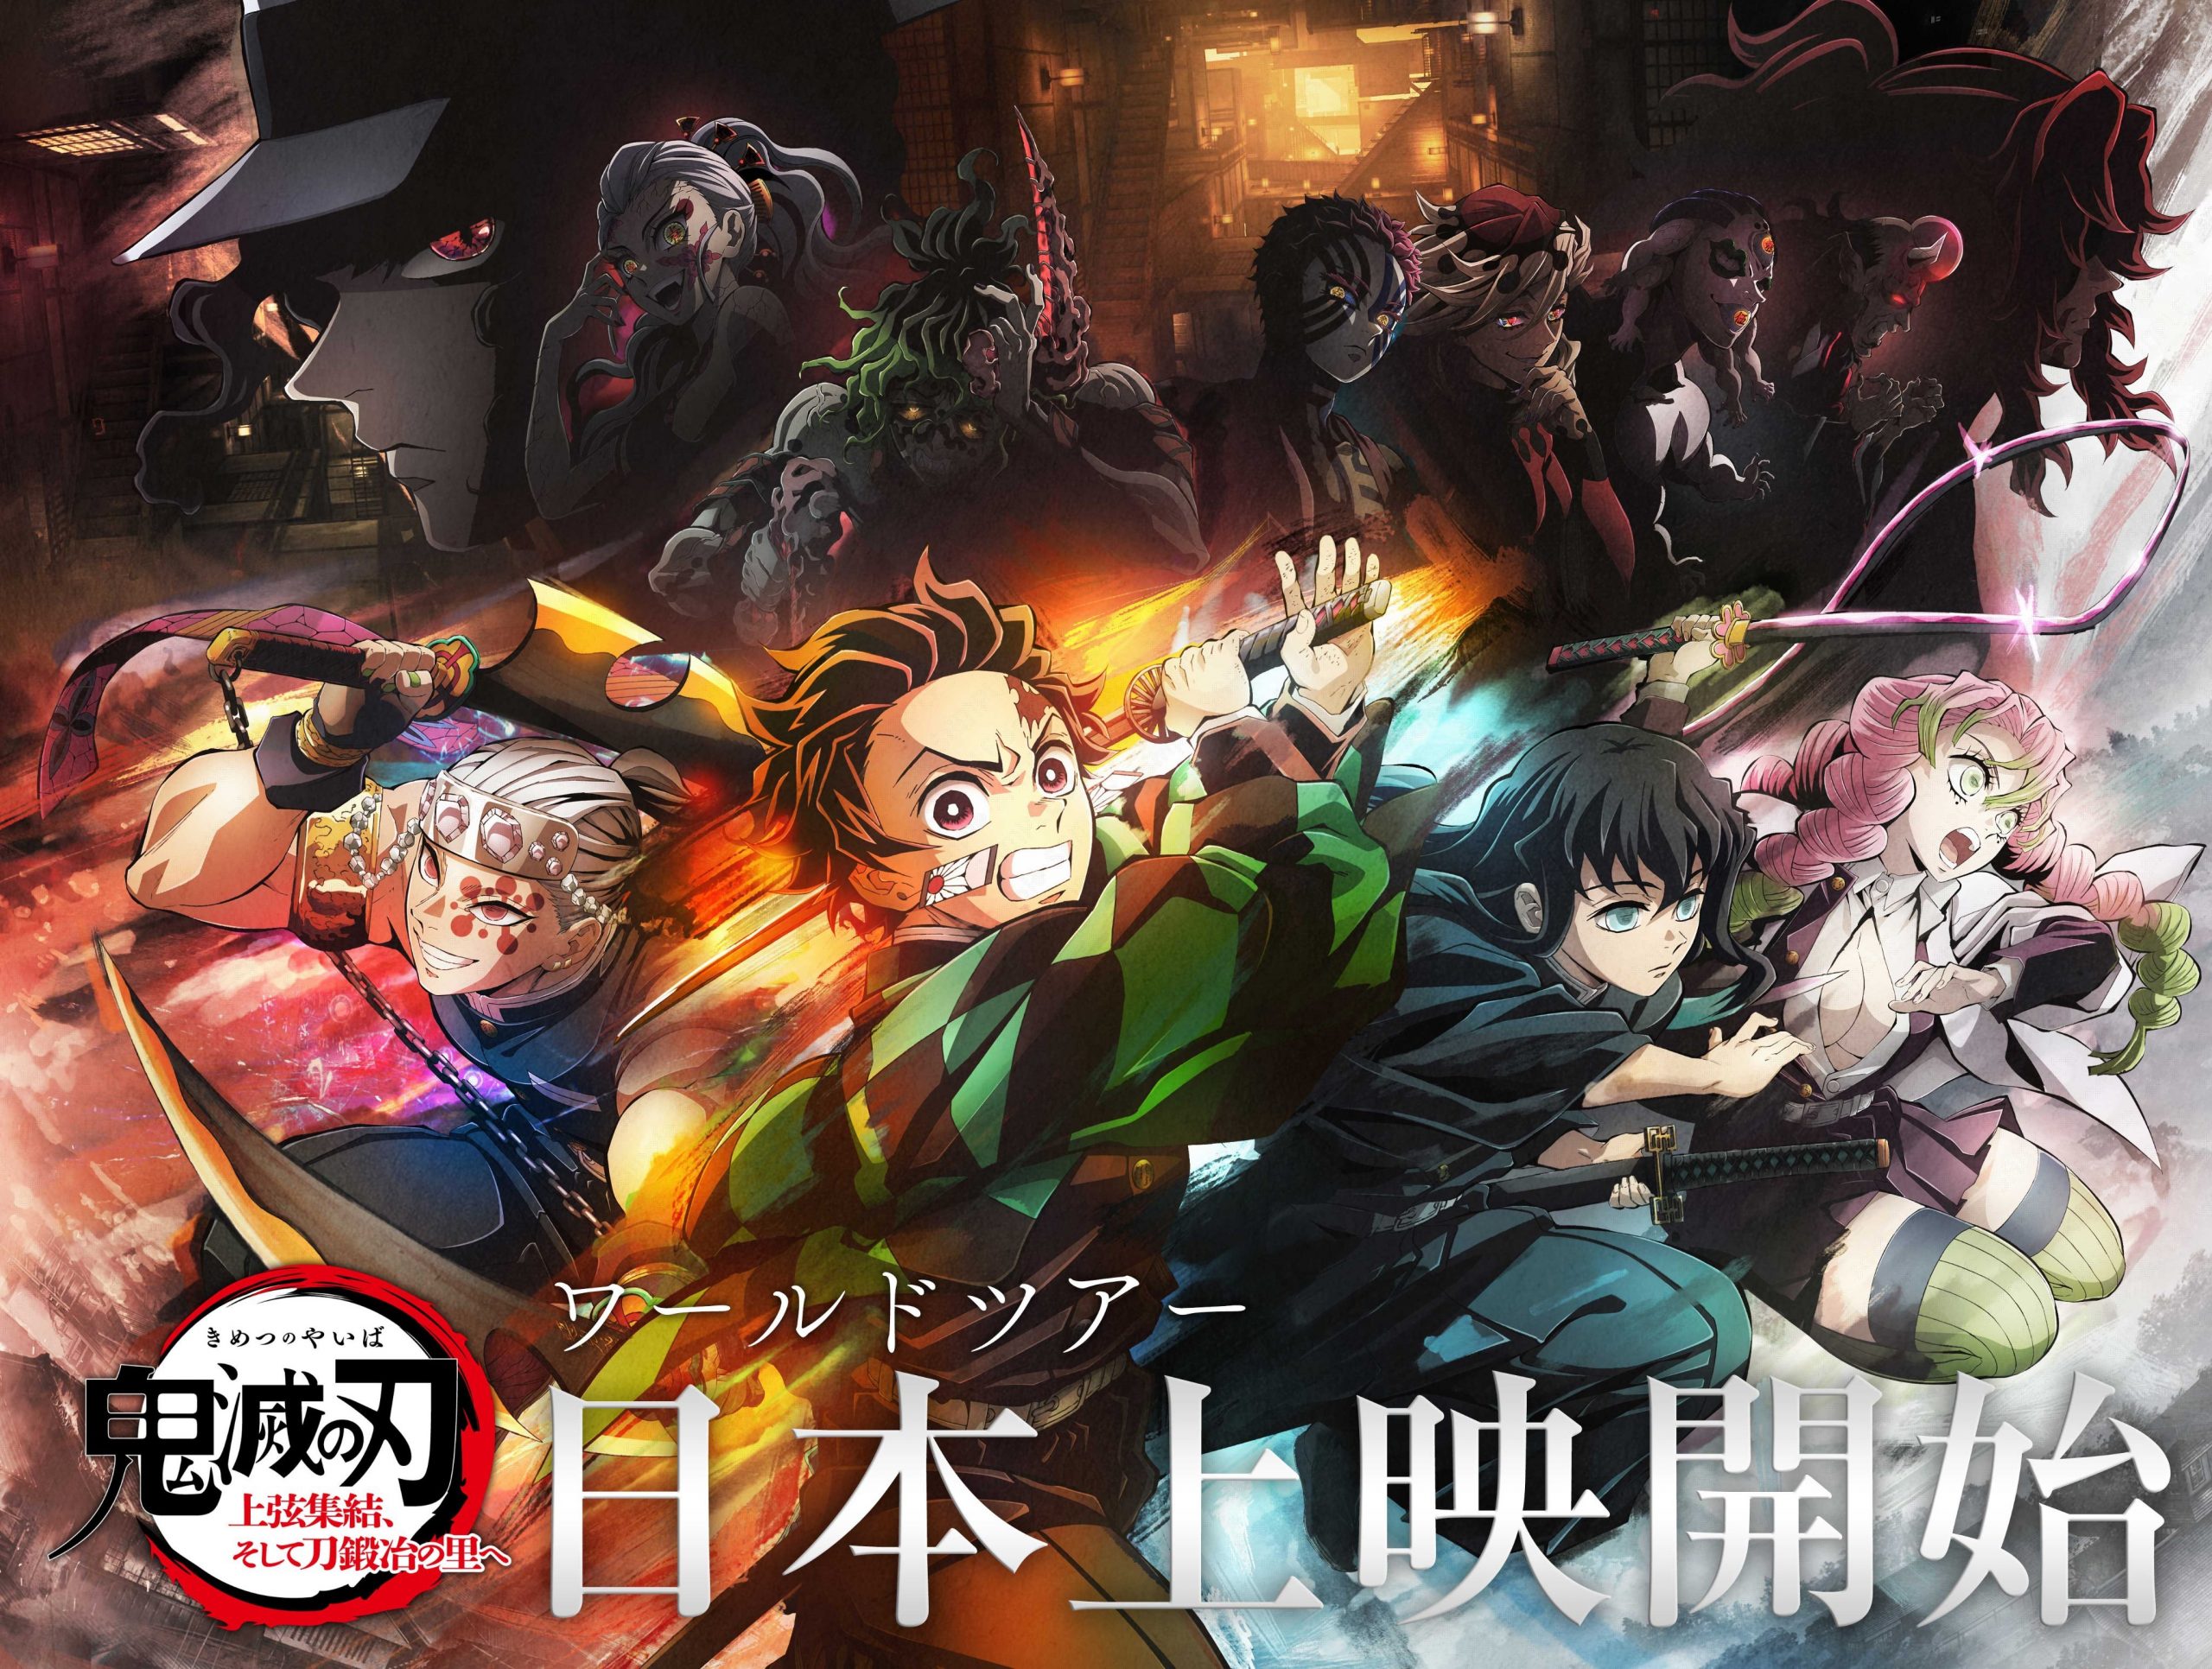 Demon Slayer: Kimetsu no Yaiba - Saiba quando estreia a 3ª temporada -  AnimeNew